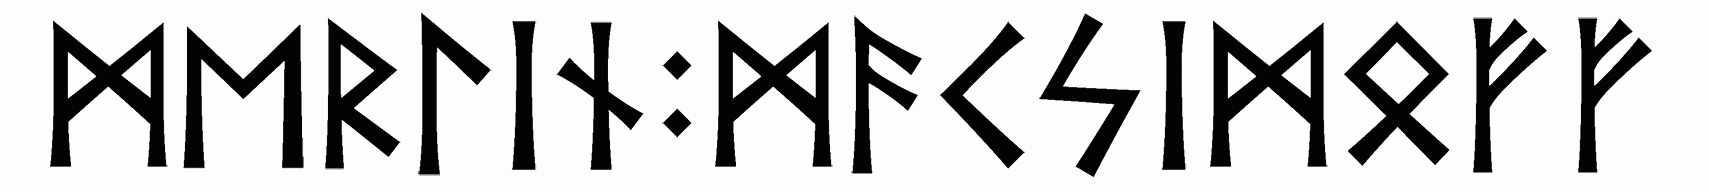 merlin+maximoff - Напиши имя  MERLIN+MAXIMOFF рунами  - ᛗᛖᚱᛚᛁᚾ:ᛗᚨᚲᛋᛁᛗᛟᚠᚠ - Значение и характер имени  MERLIN+MAXIMOFF - 